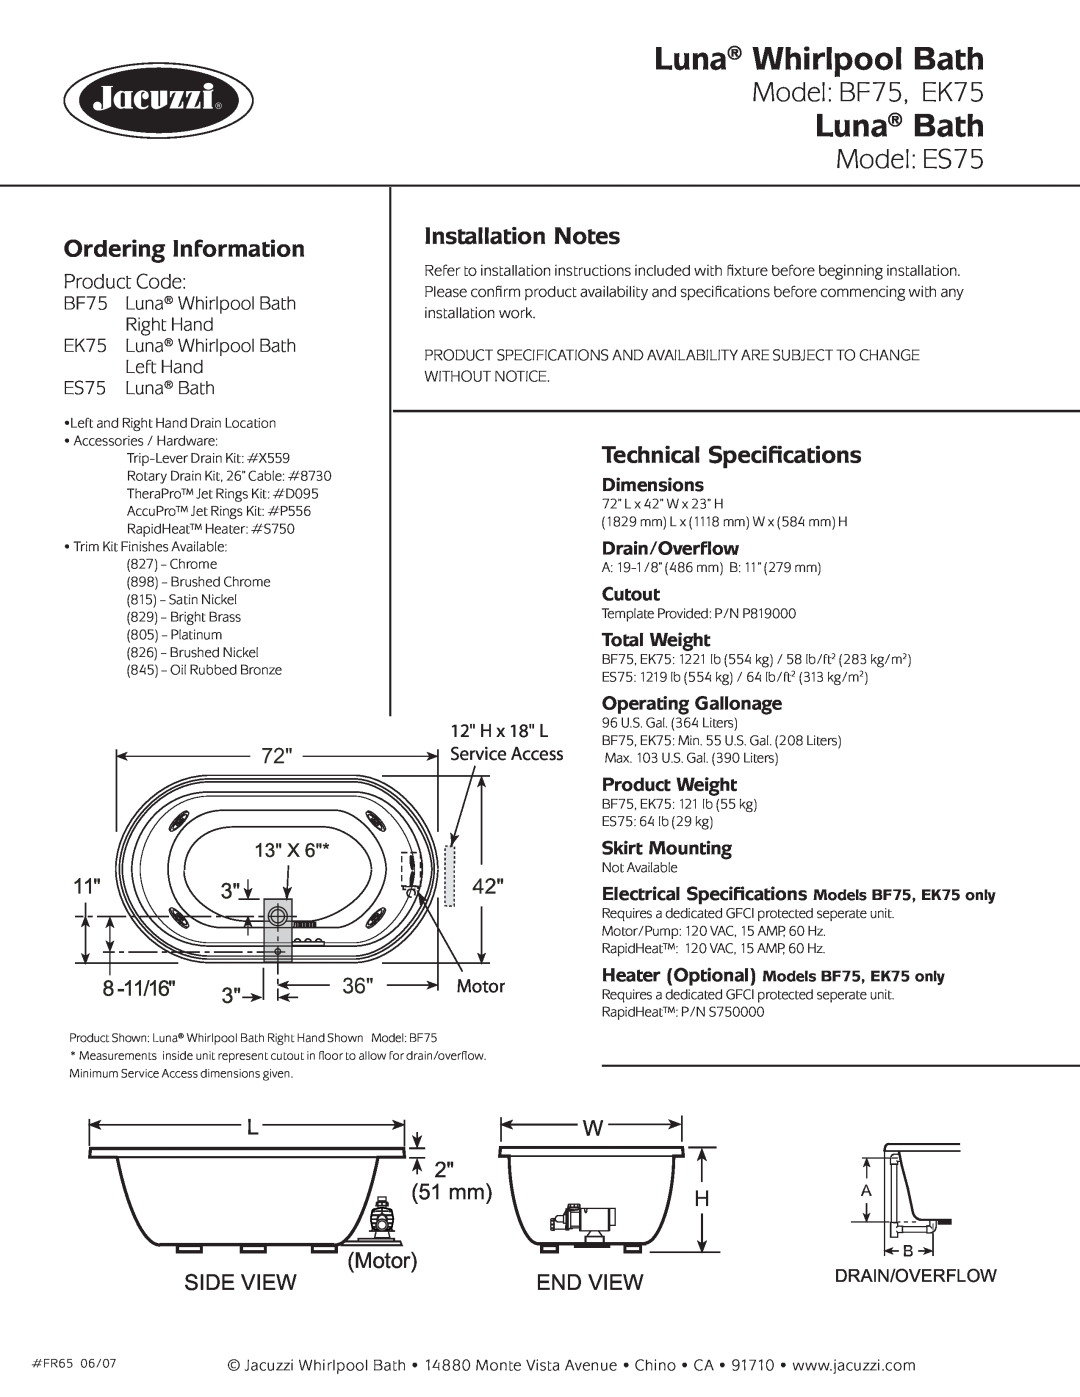 Jacuzzi EK75-LH Luna Whirlpool Bath, Luna Bath, Model BF75, EK75, Model ES75, Ordering Information, Installation Notes 